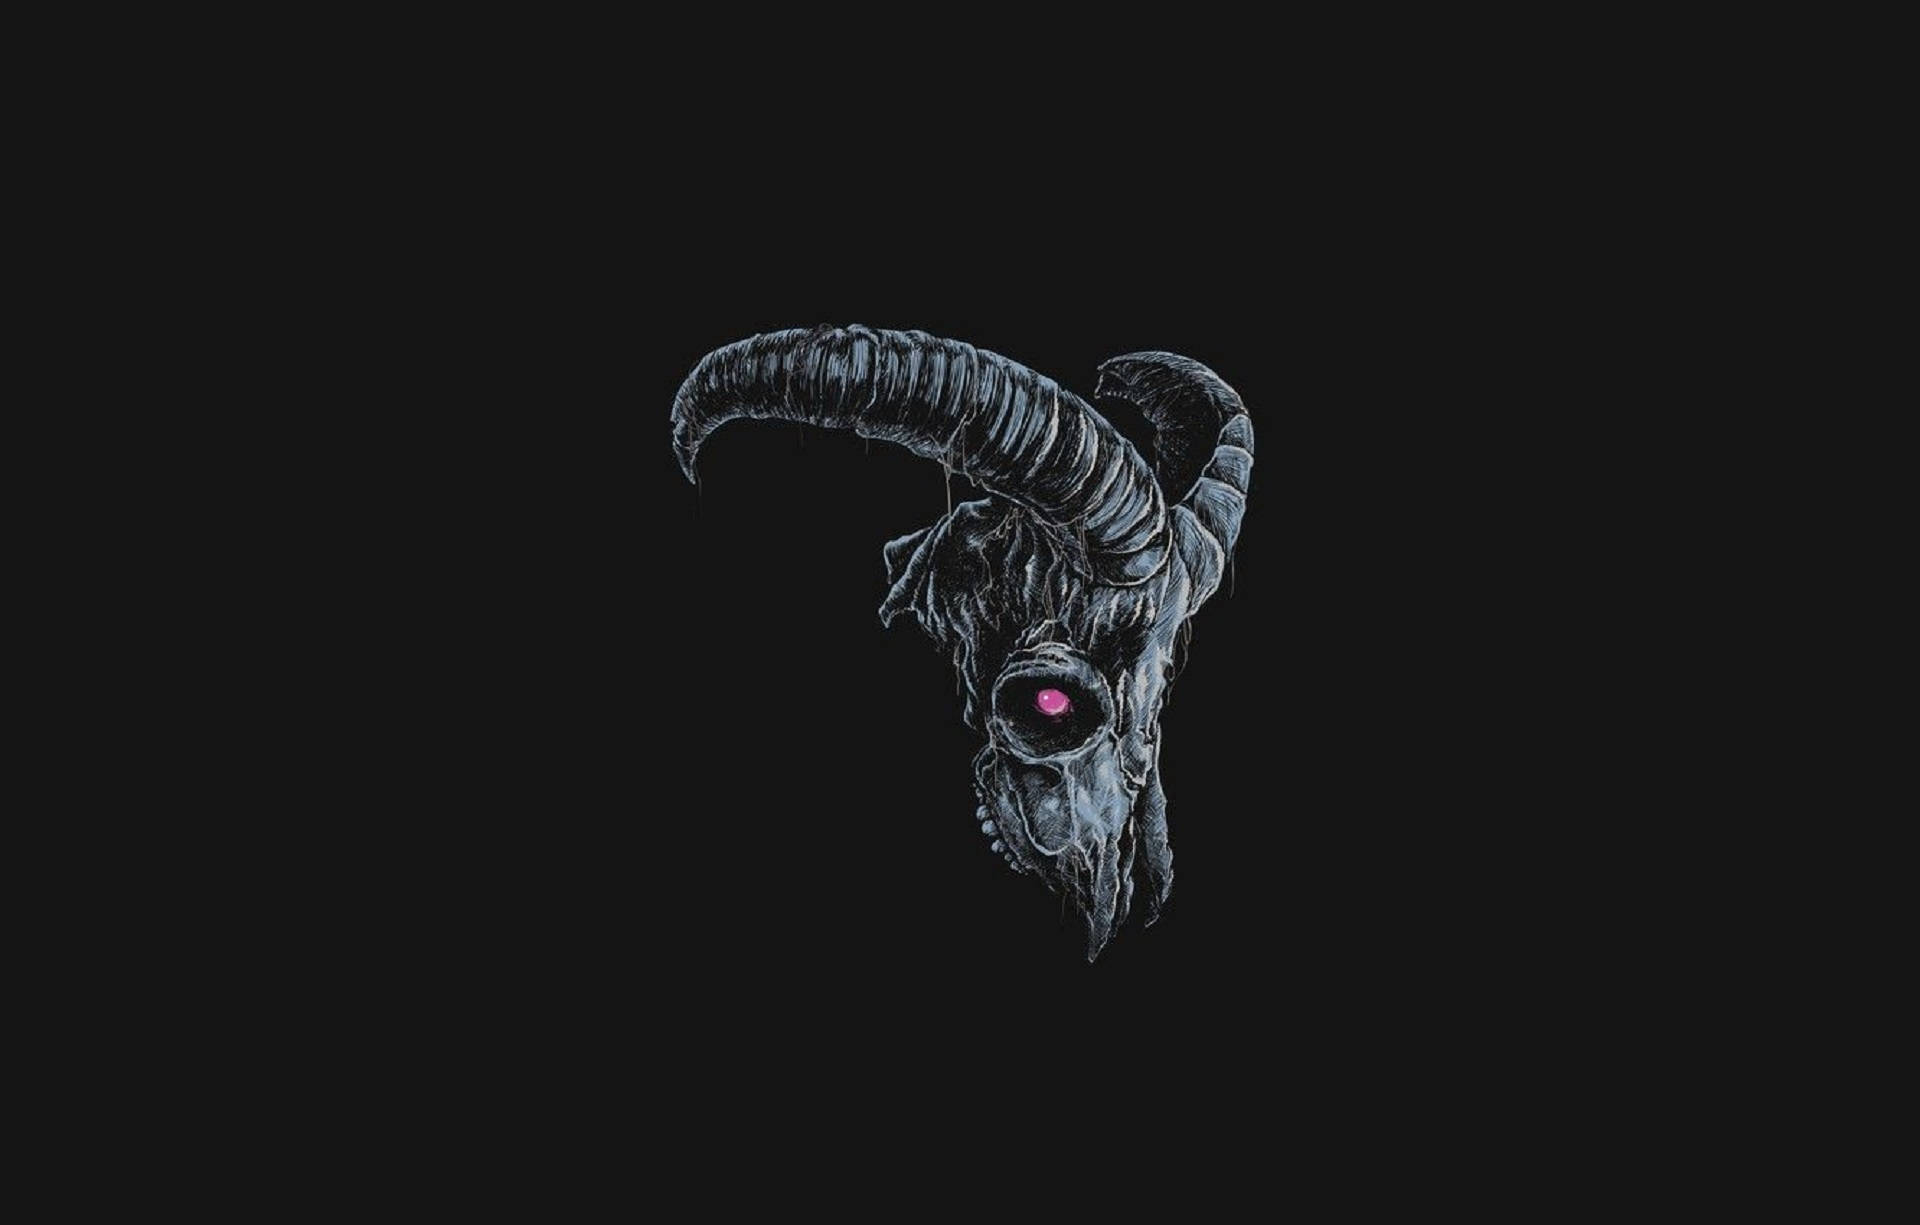 Caption: Striking Image of a Devil Goat in Black Wallpaper